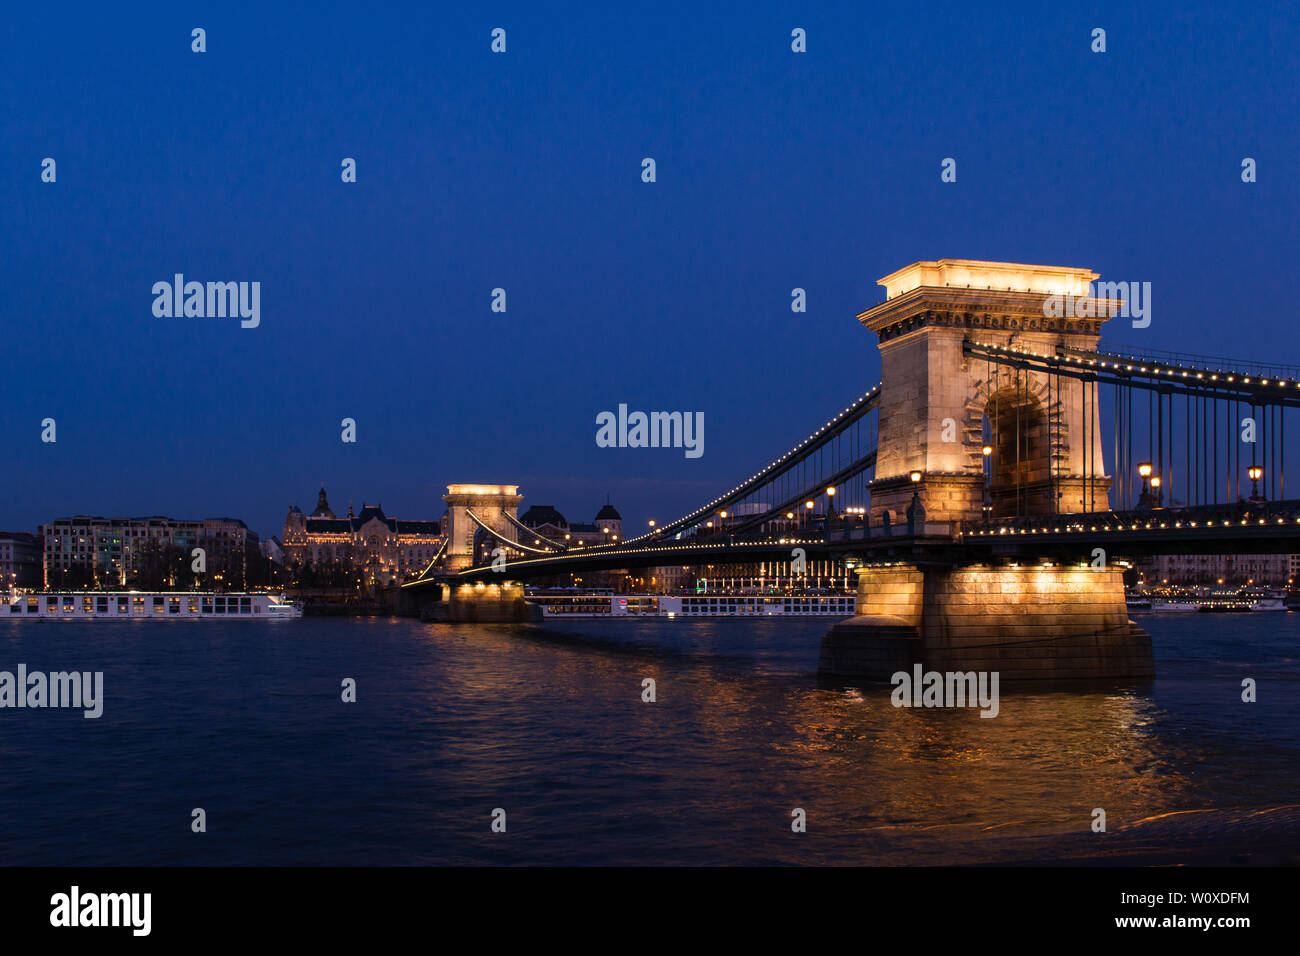 Szechenyi Chain Bridge illuminated at night over the Danube River in Budapest Stock Photo